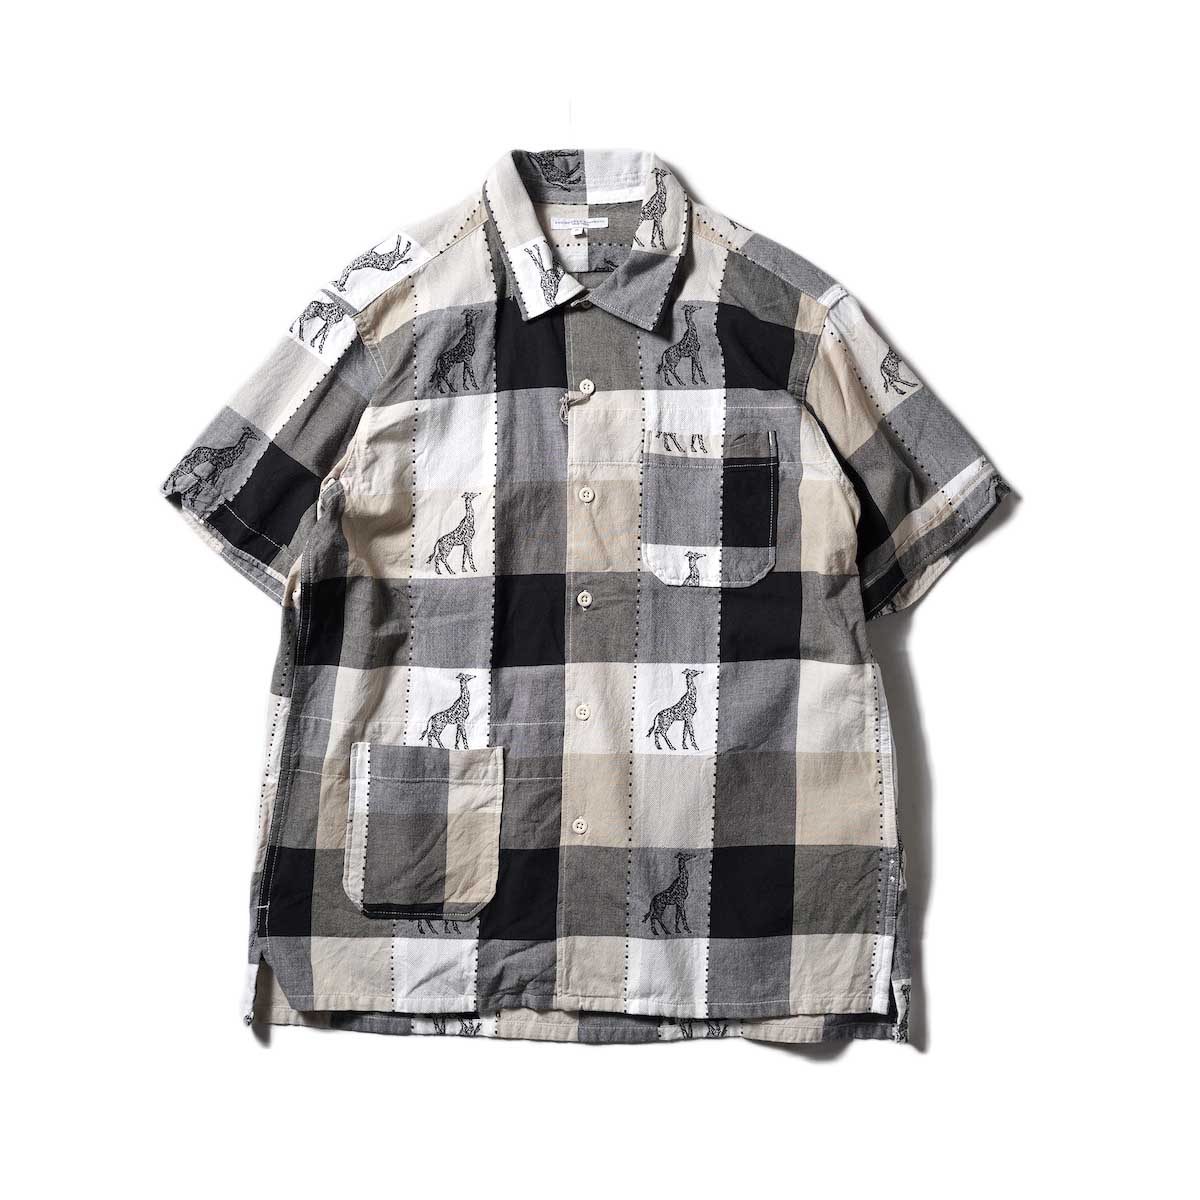 Engineered Garments / Camp Shirt - Cotton Giraffe Jacquard (Beige/Black)